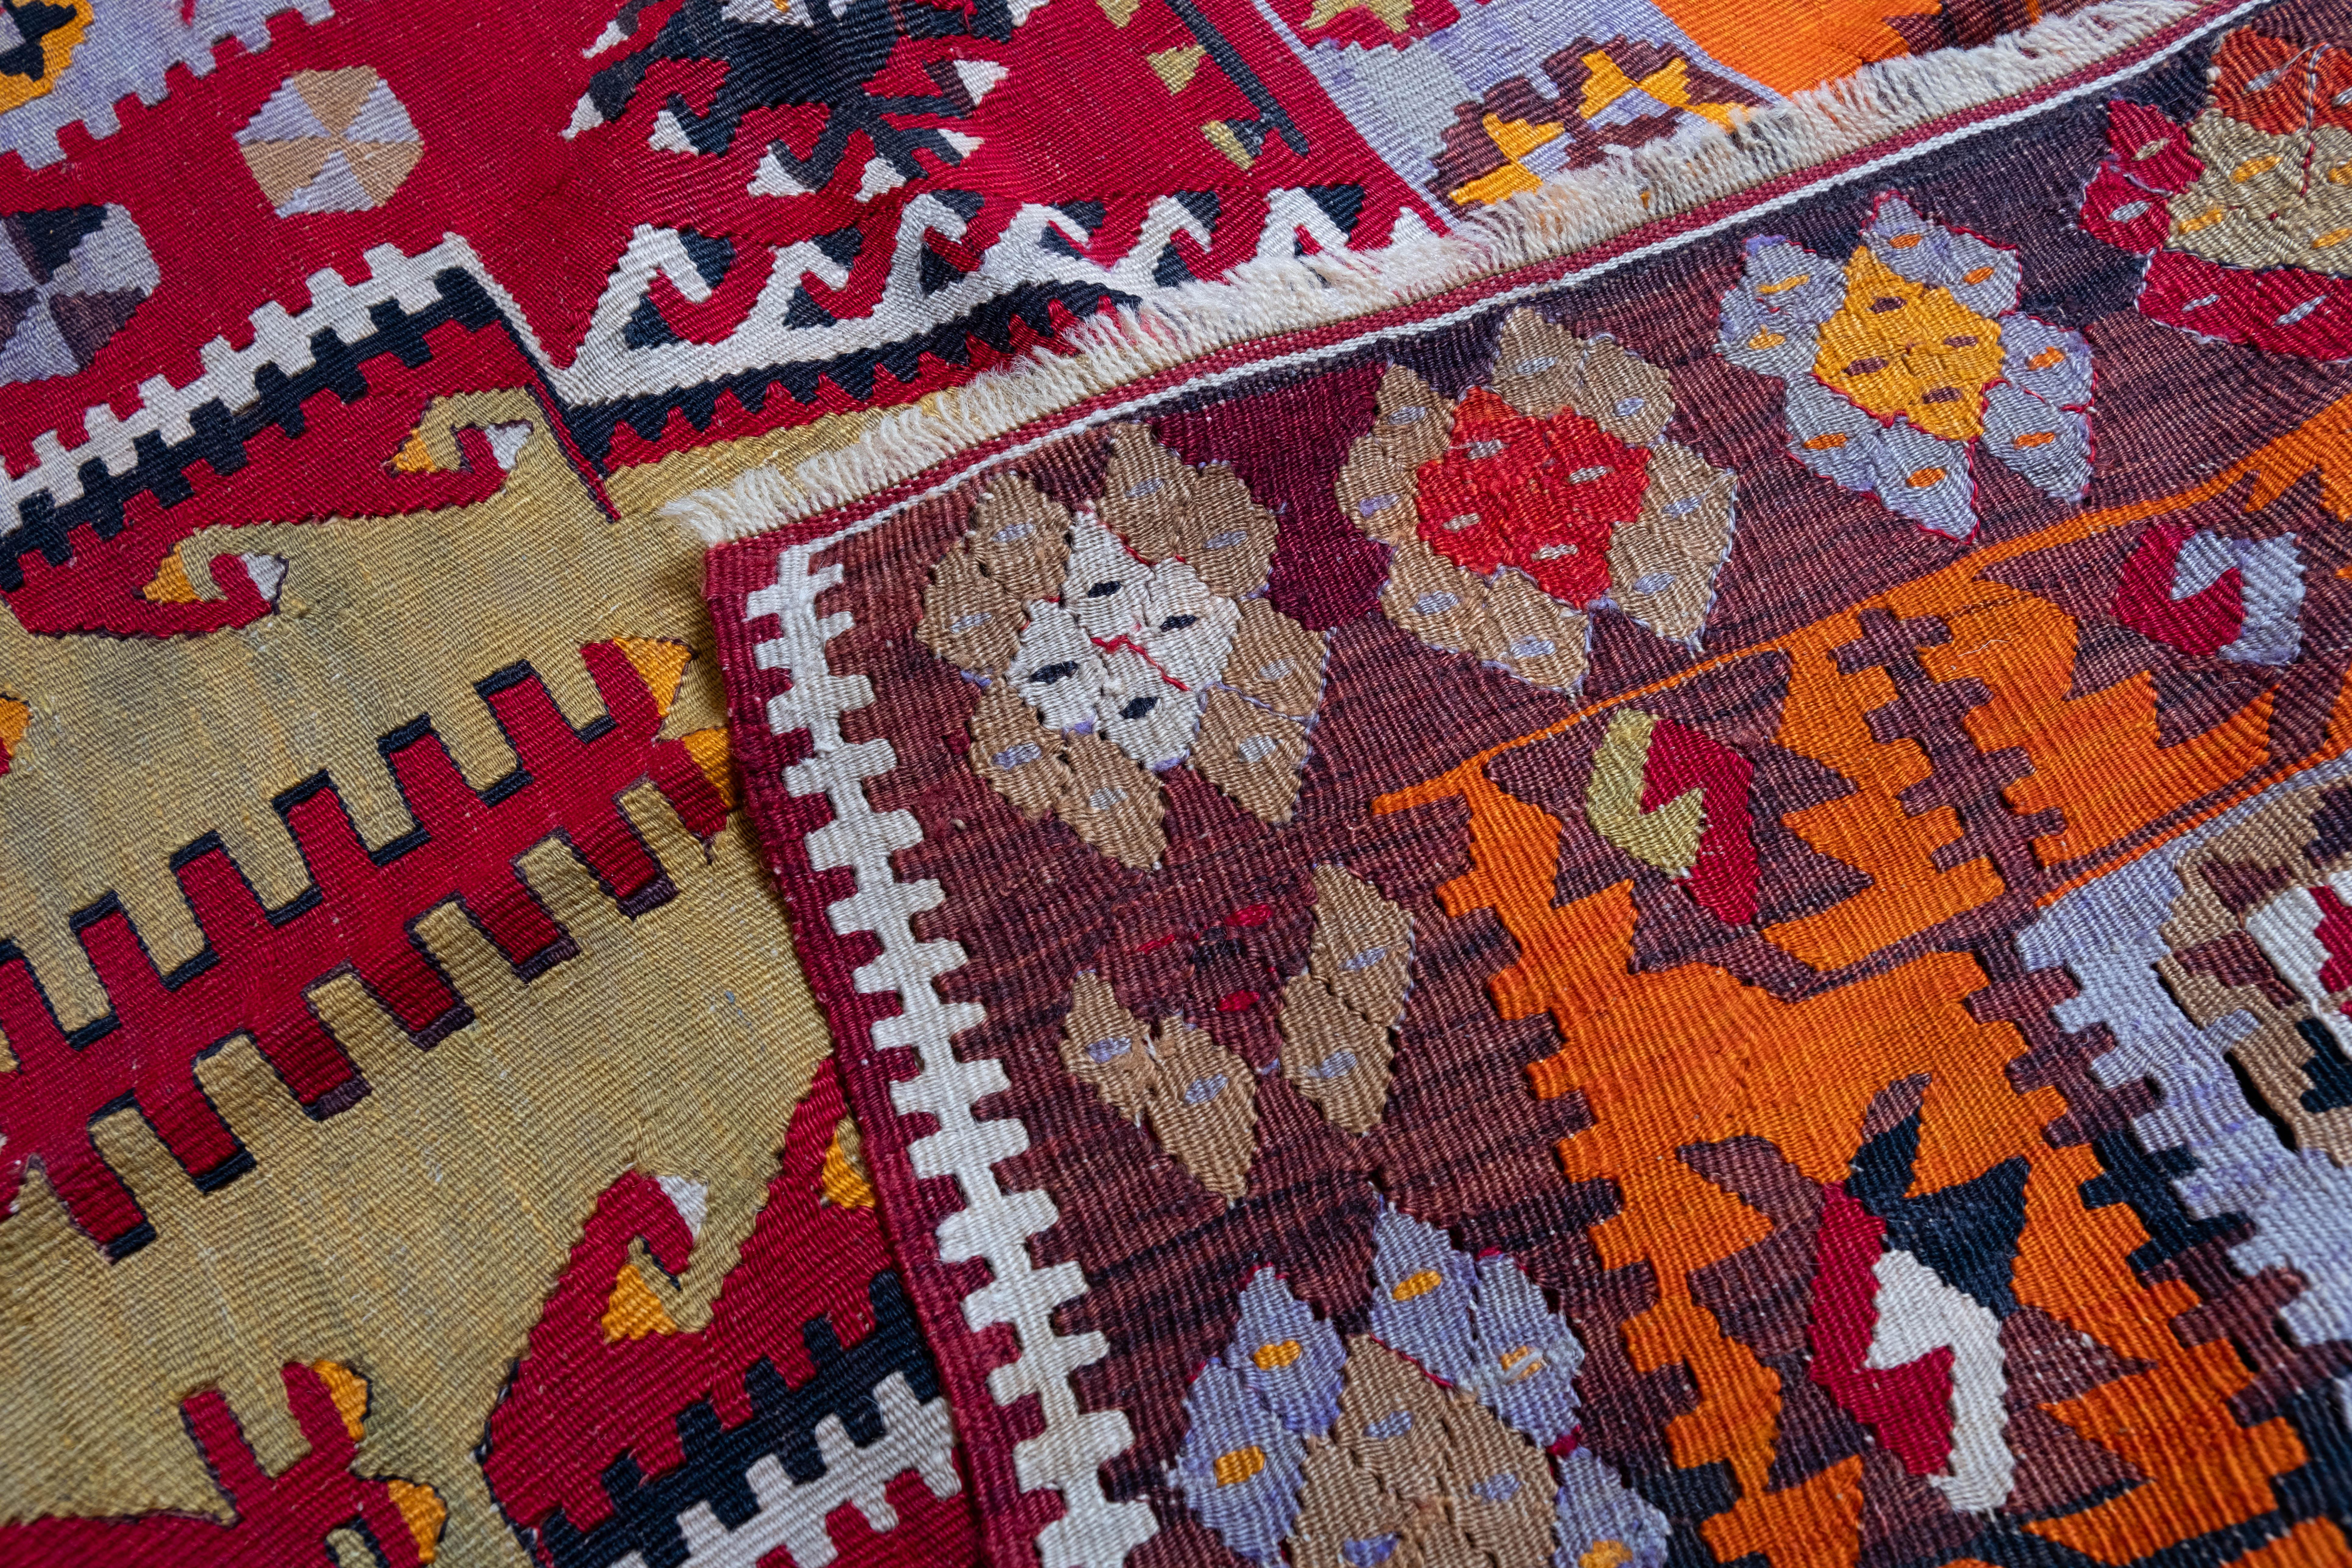 Hand-Woven Antique Gomurgen Kayseri Kilim Rug Wool Old Central Anatolian Turkish Carpet For Sale